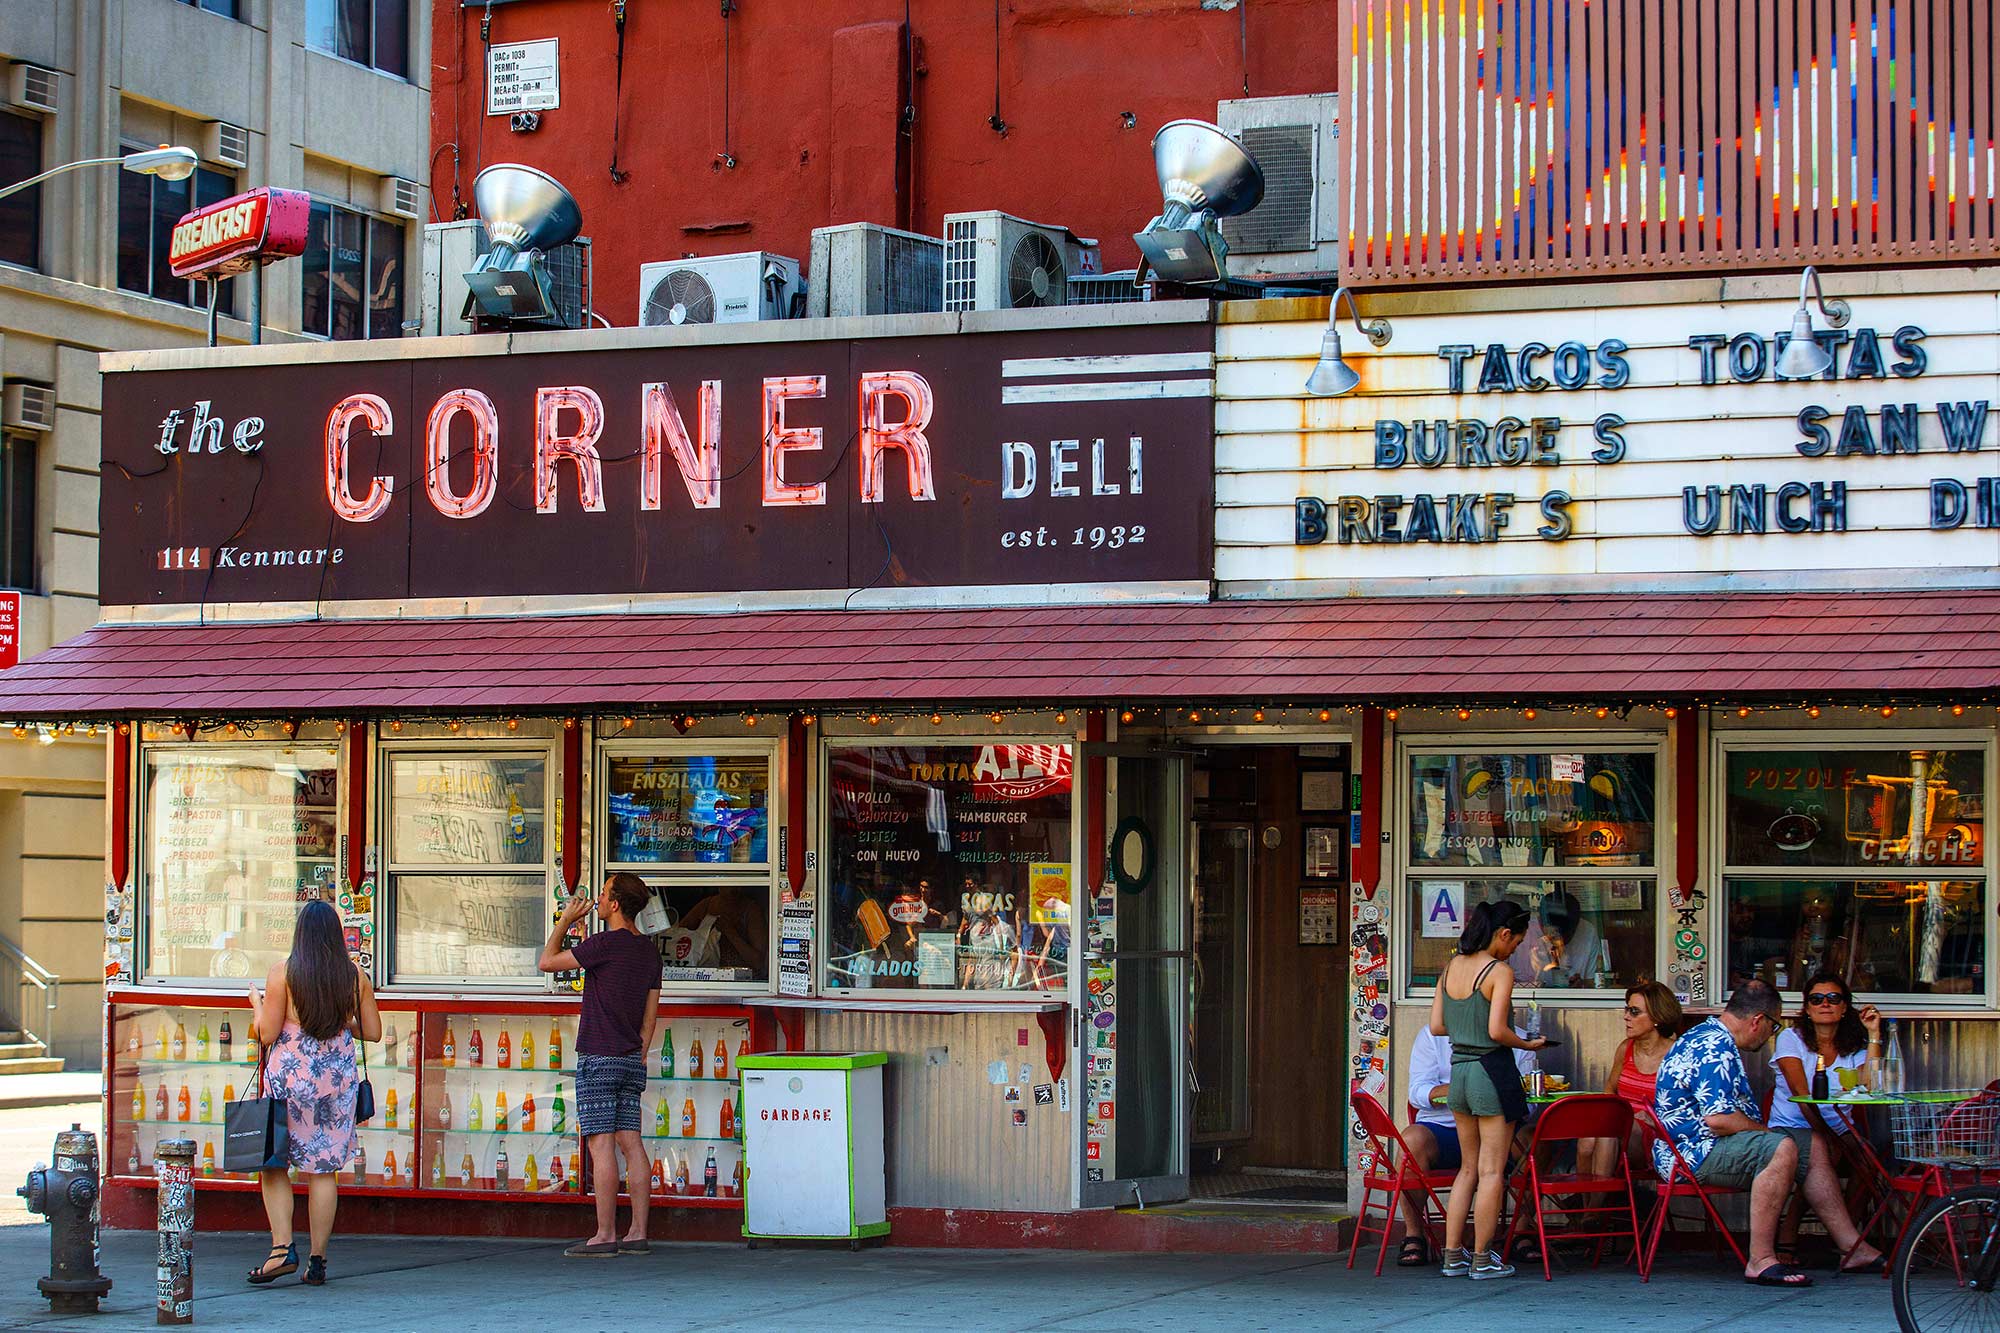 The Corner Deli, SoHo New York - 8/15/15